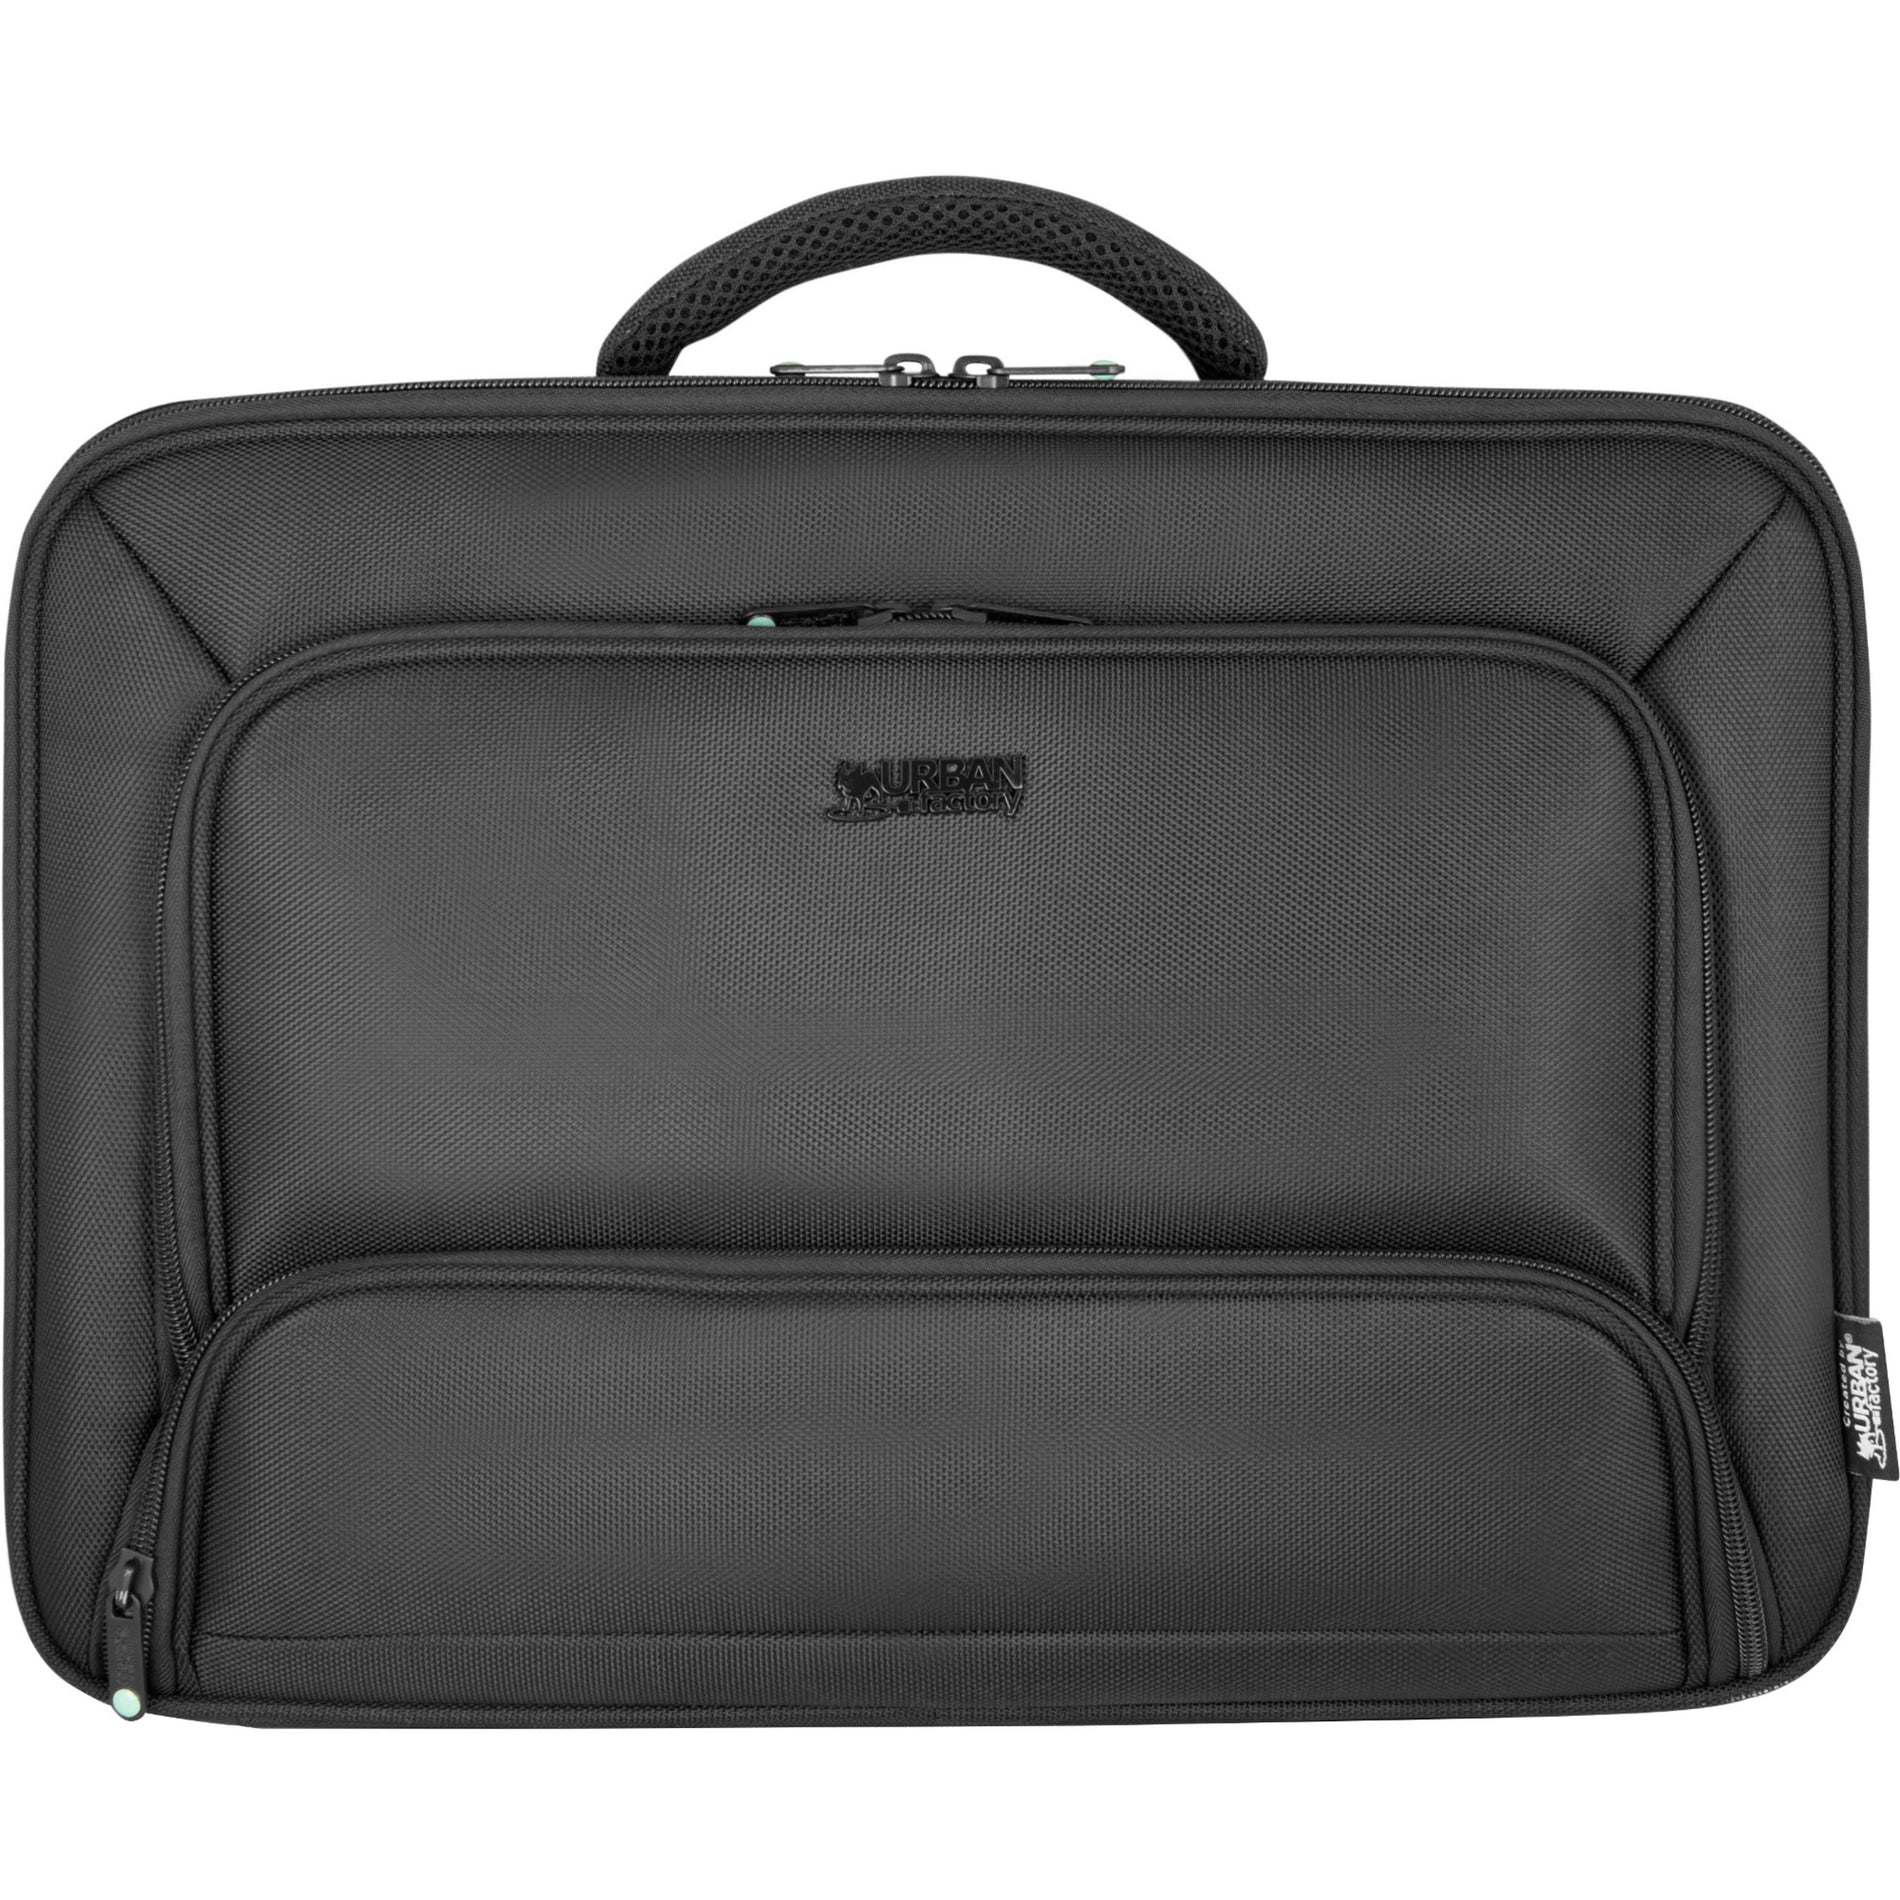 Urban Factory MXC17UF MIXEE Clamshell Case 17.3" Notebook, Black - Drop Resistant, Water Resistant, Lifetime Warranty